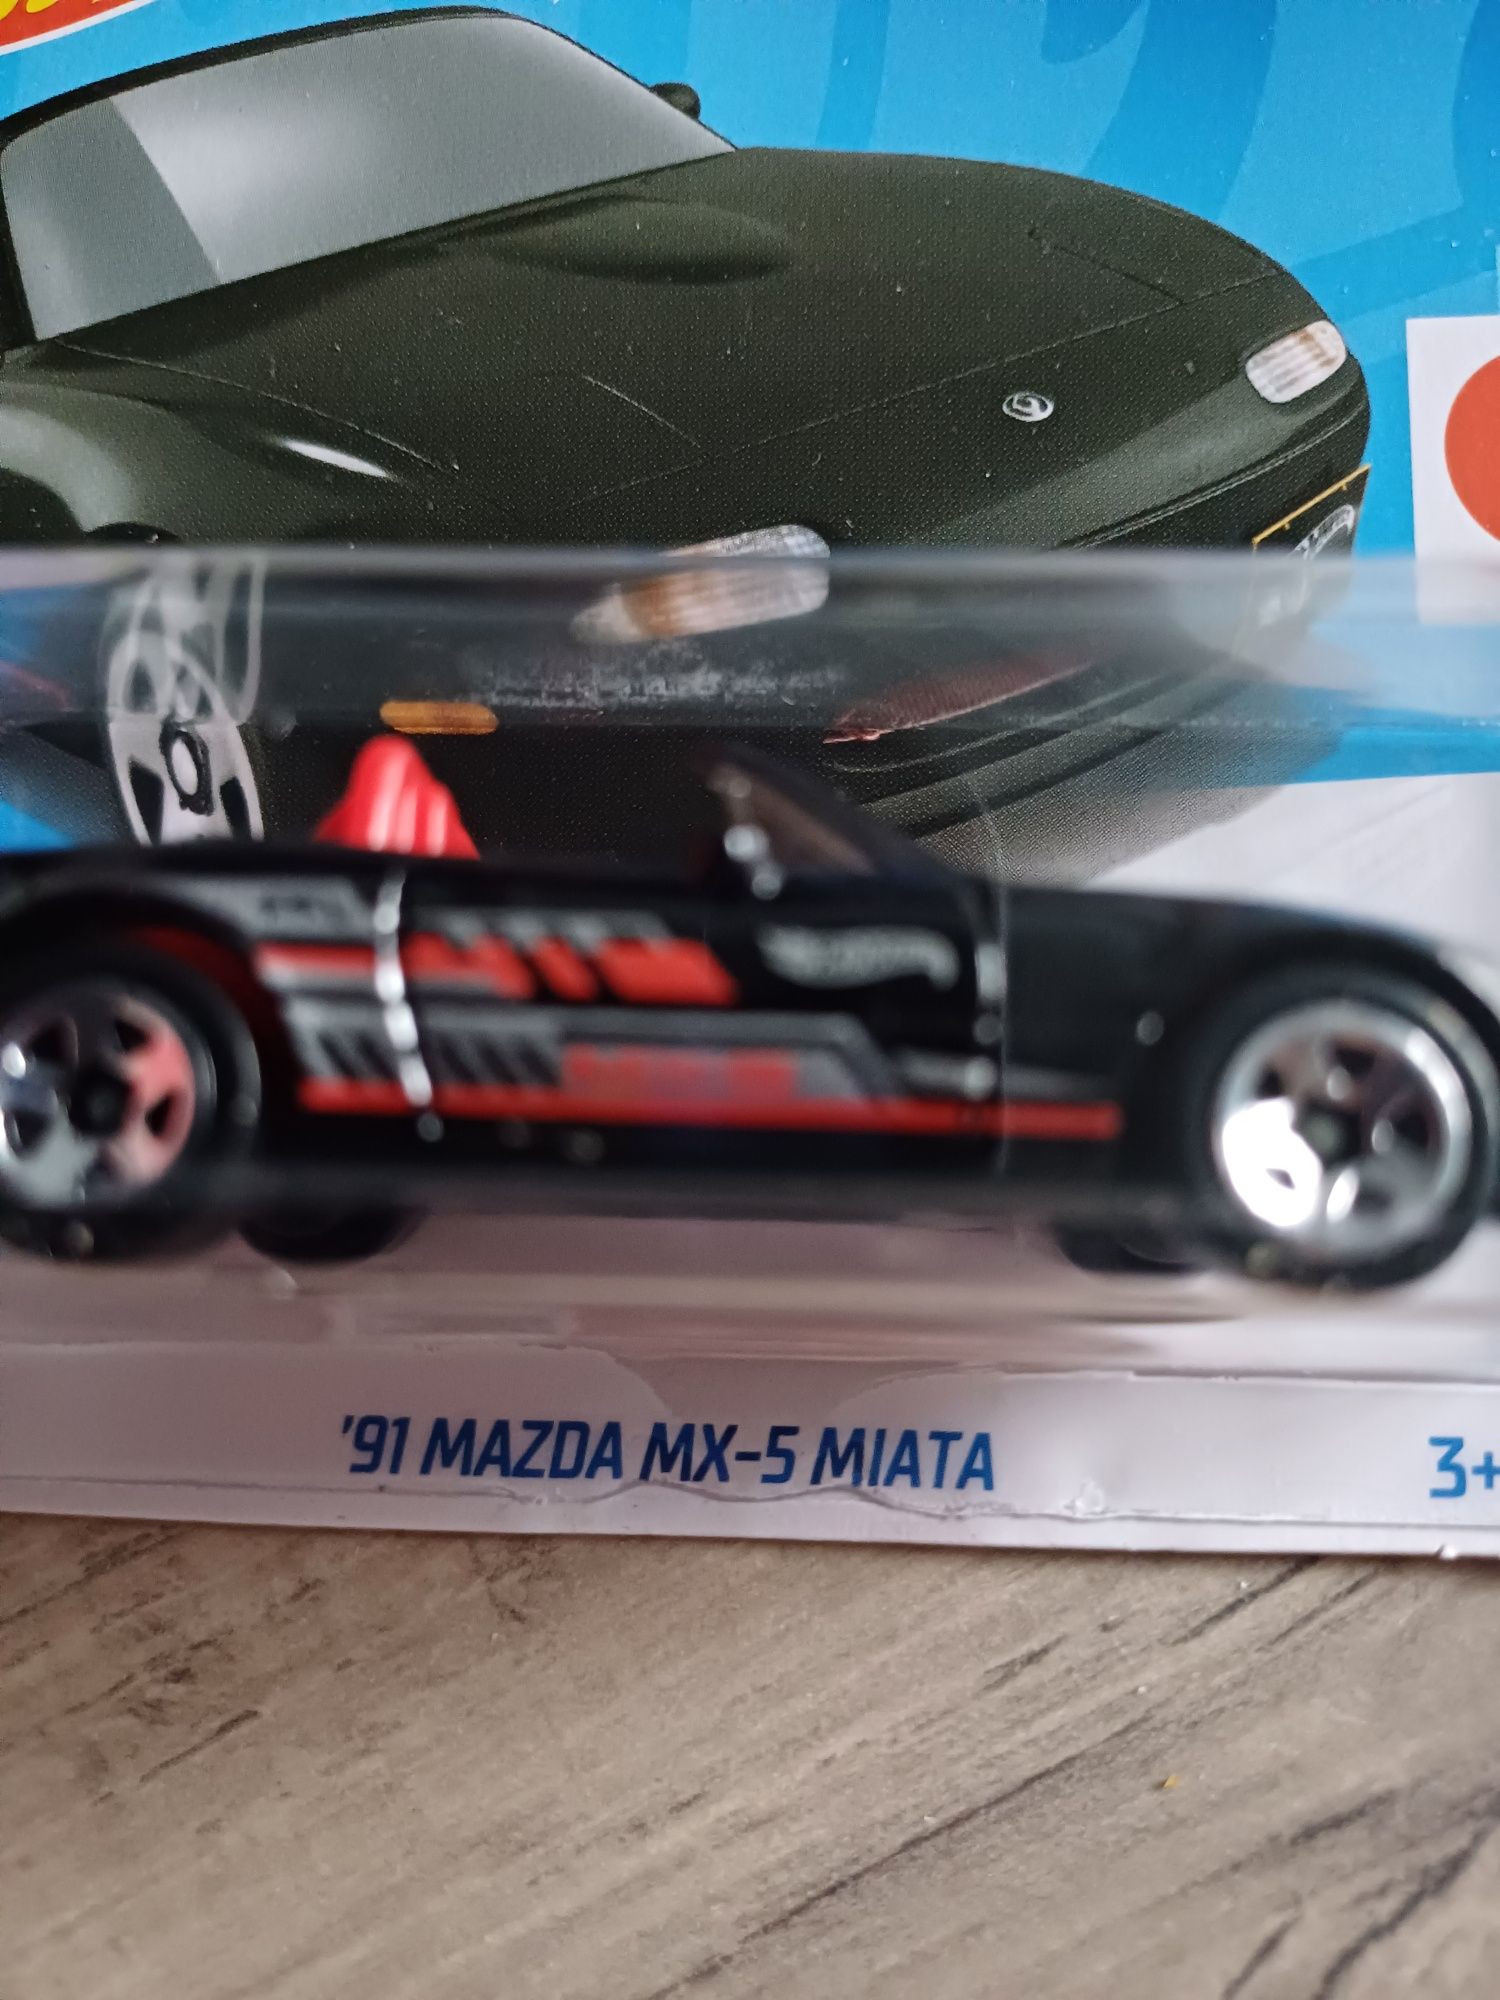 Hot Wheels 91 Mazda MX-5 Miata